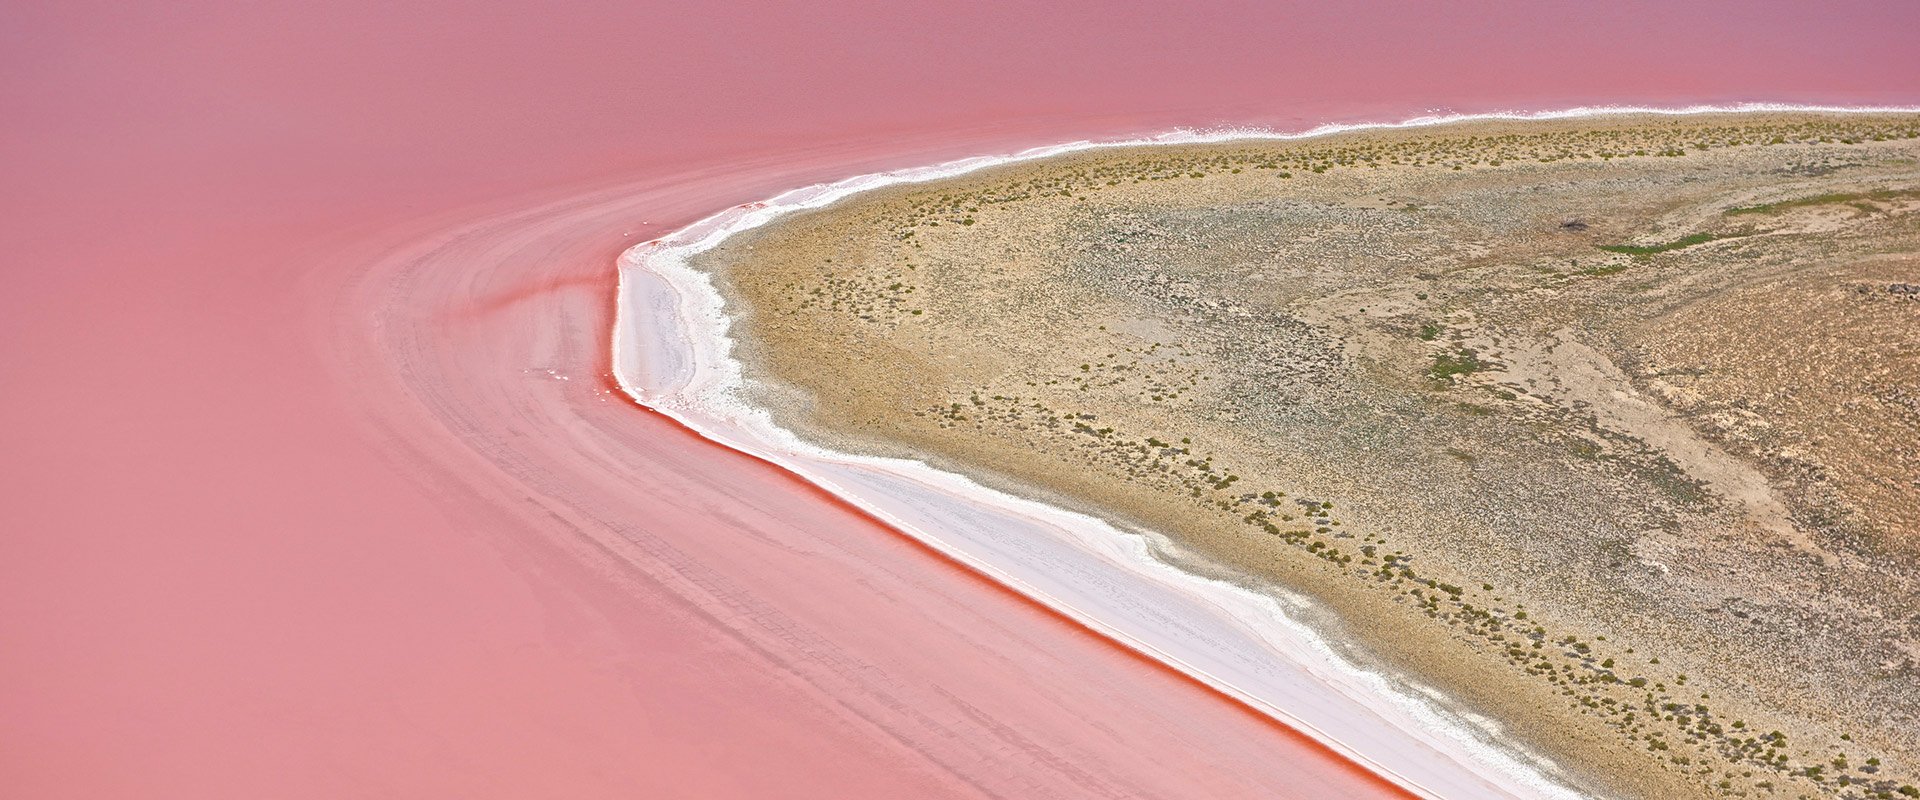 Lake Eyre, Outback South Australia